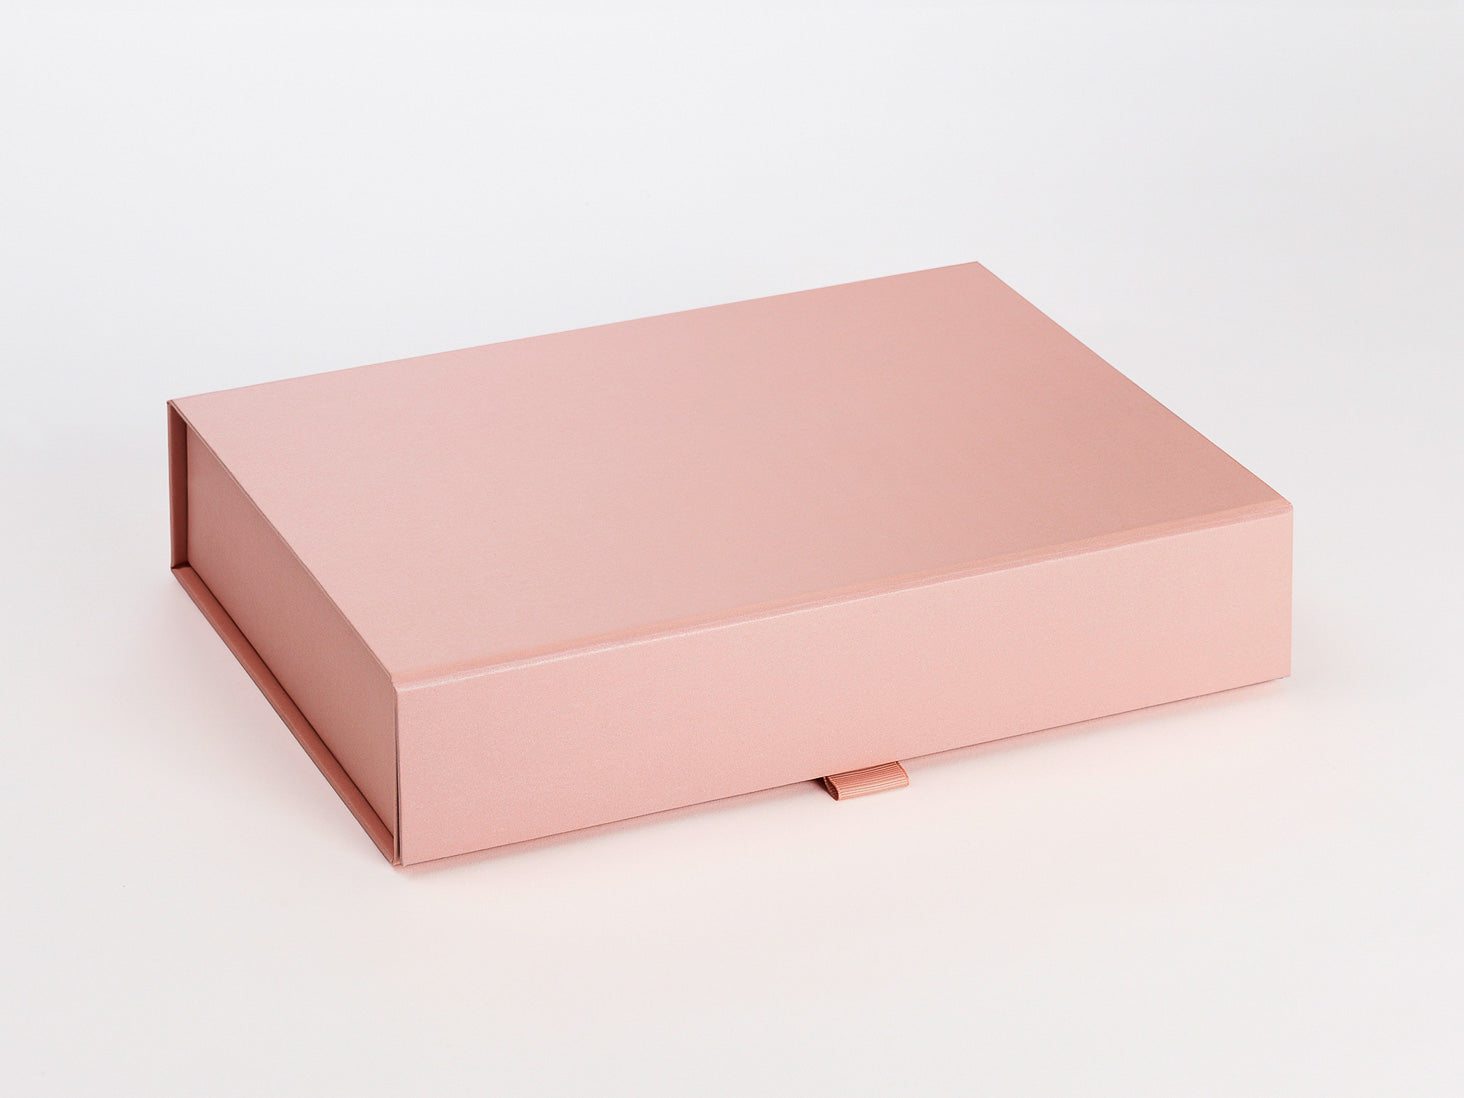 Rose Gold A4 Shallow Folding Gift Box Sample Assembled